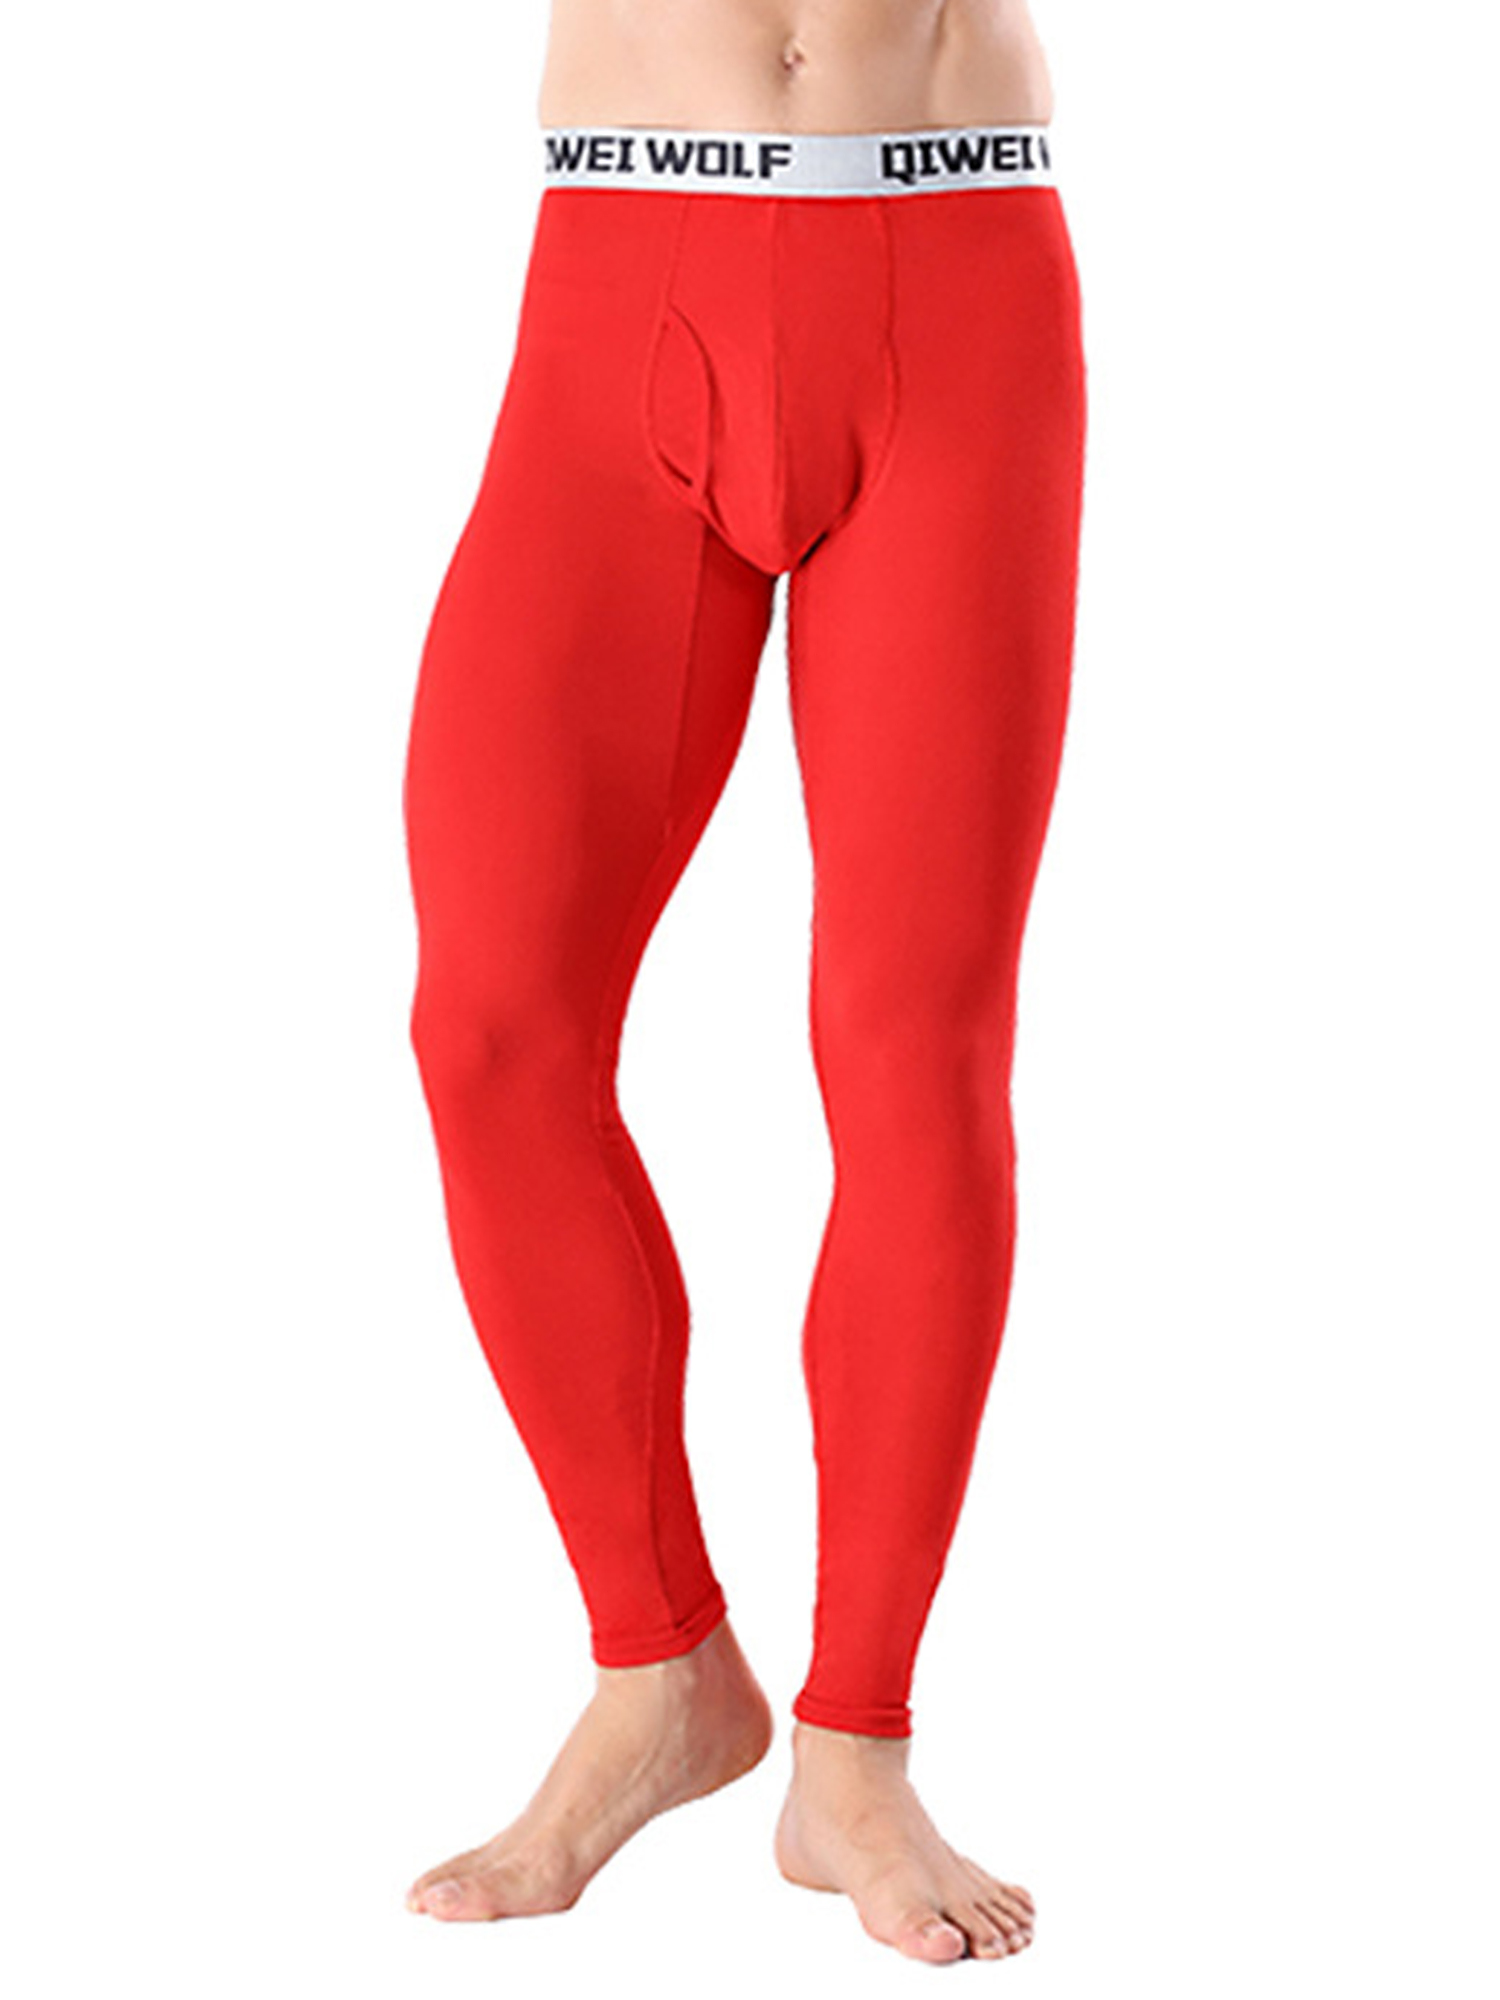 Wholesale Mens Womens 2Pc Thermal Underwear Set Long Johns Top Bottom Pants New